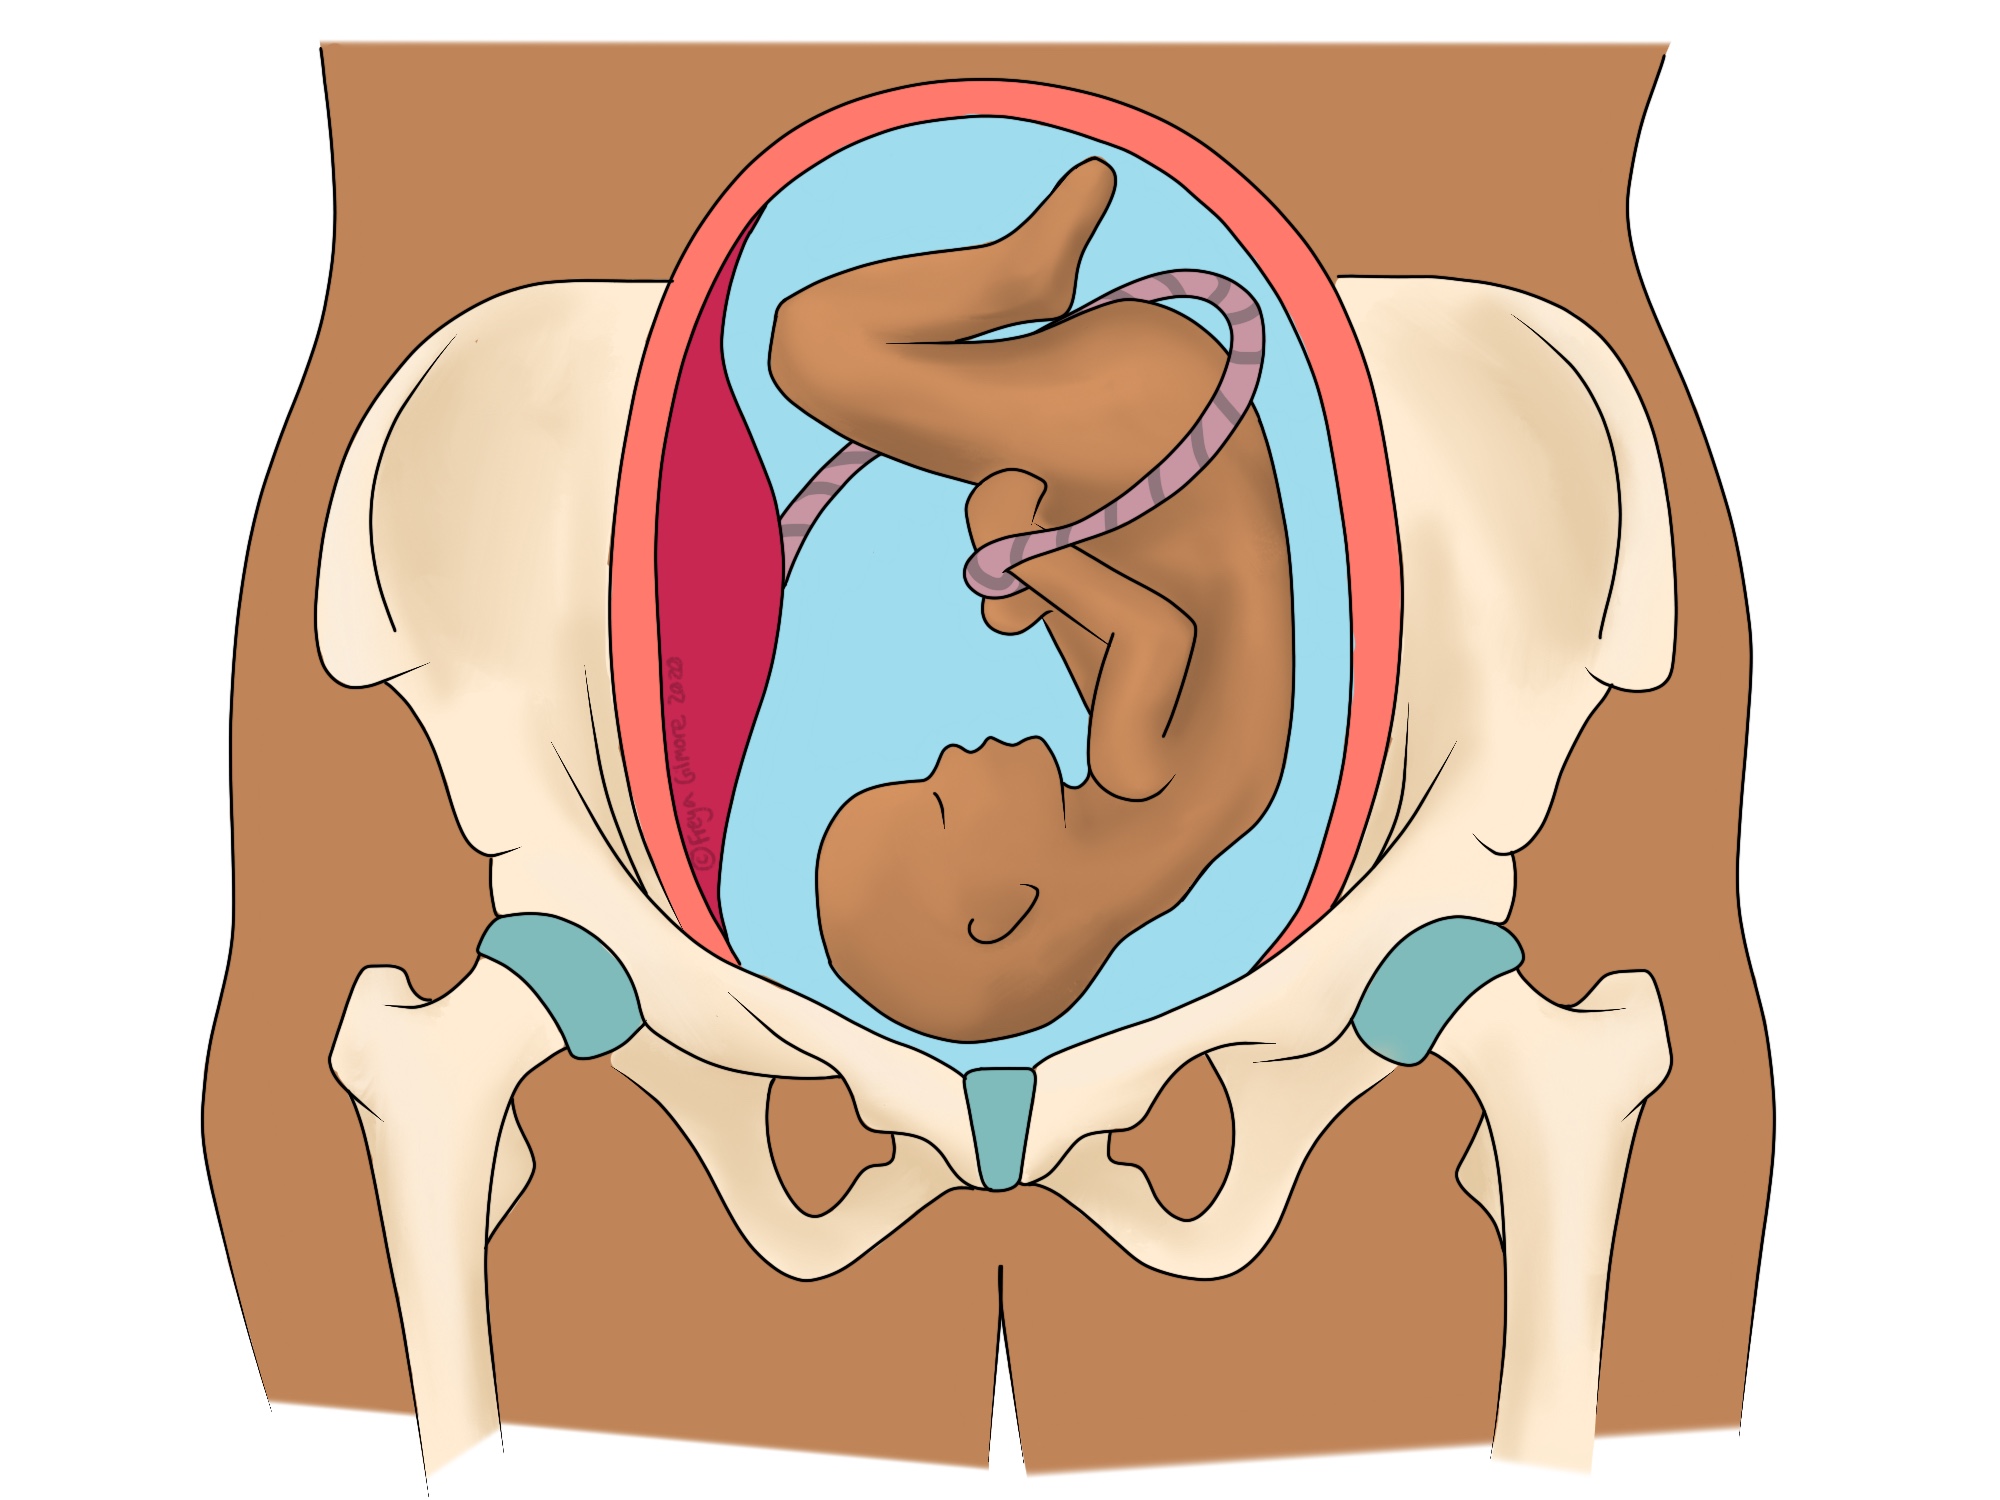 SPD: The pubic symphysis in pregnancy